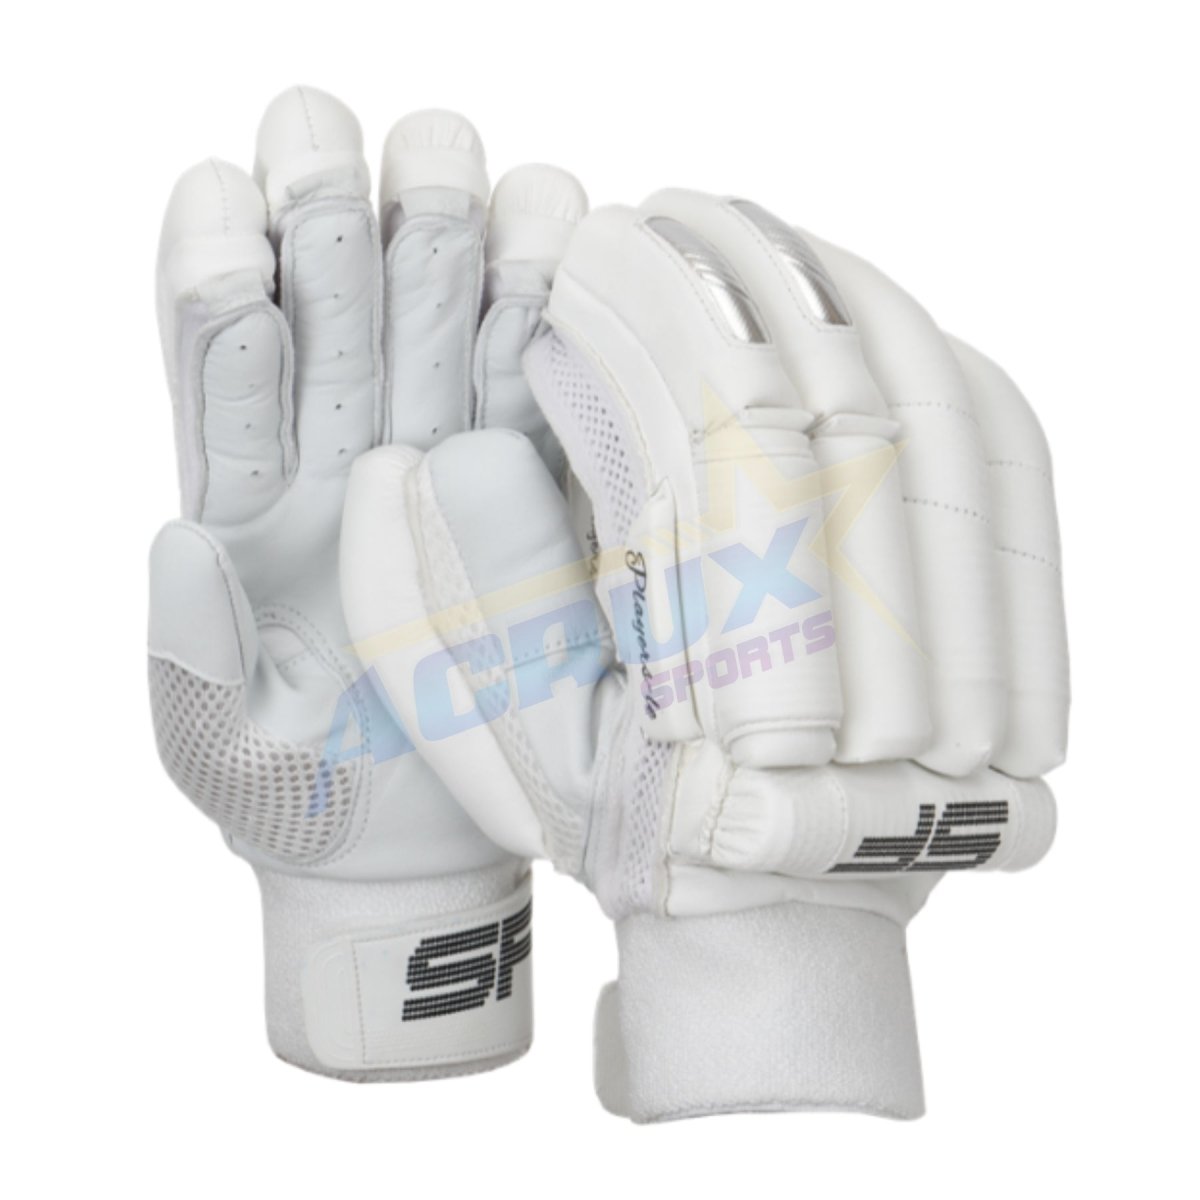 SF Players LE Cricket Batting Gloves - Acrux Sports